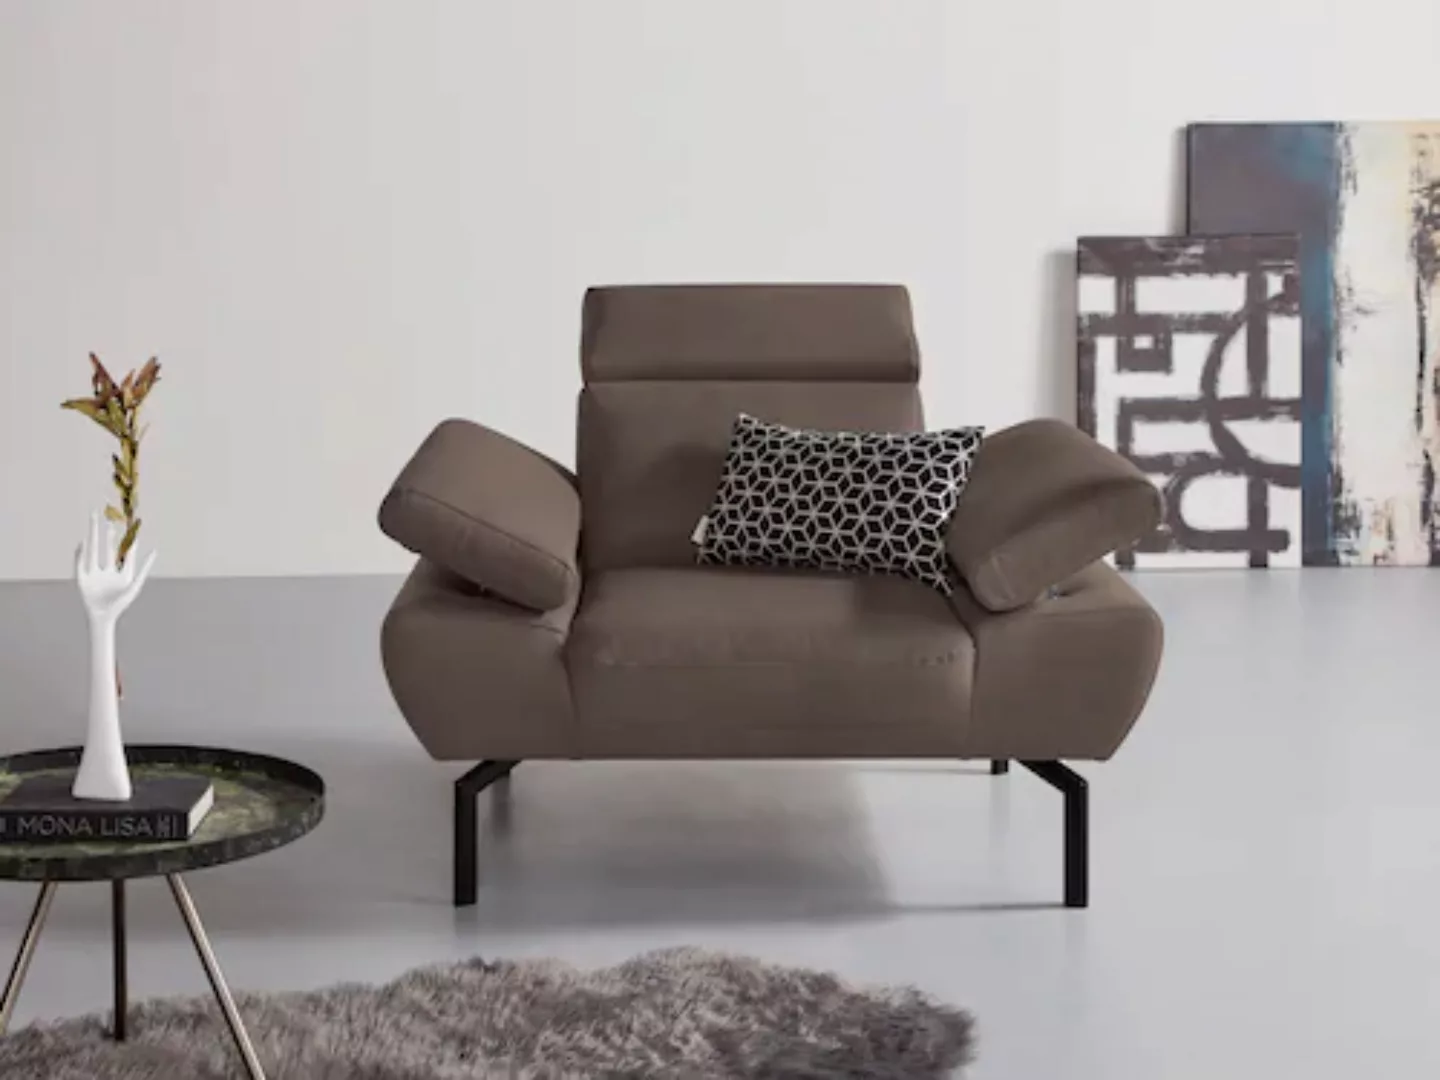 Places of Style Sessel »Trapino Luxus« günstig online kaufen